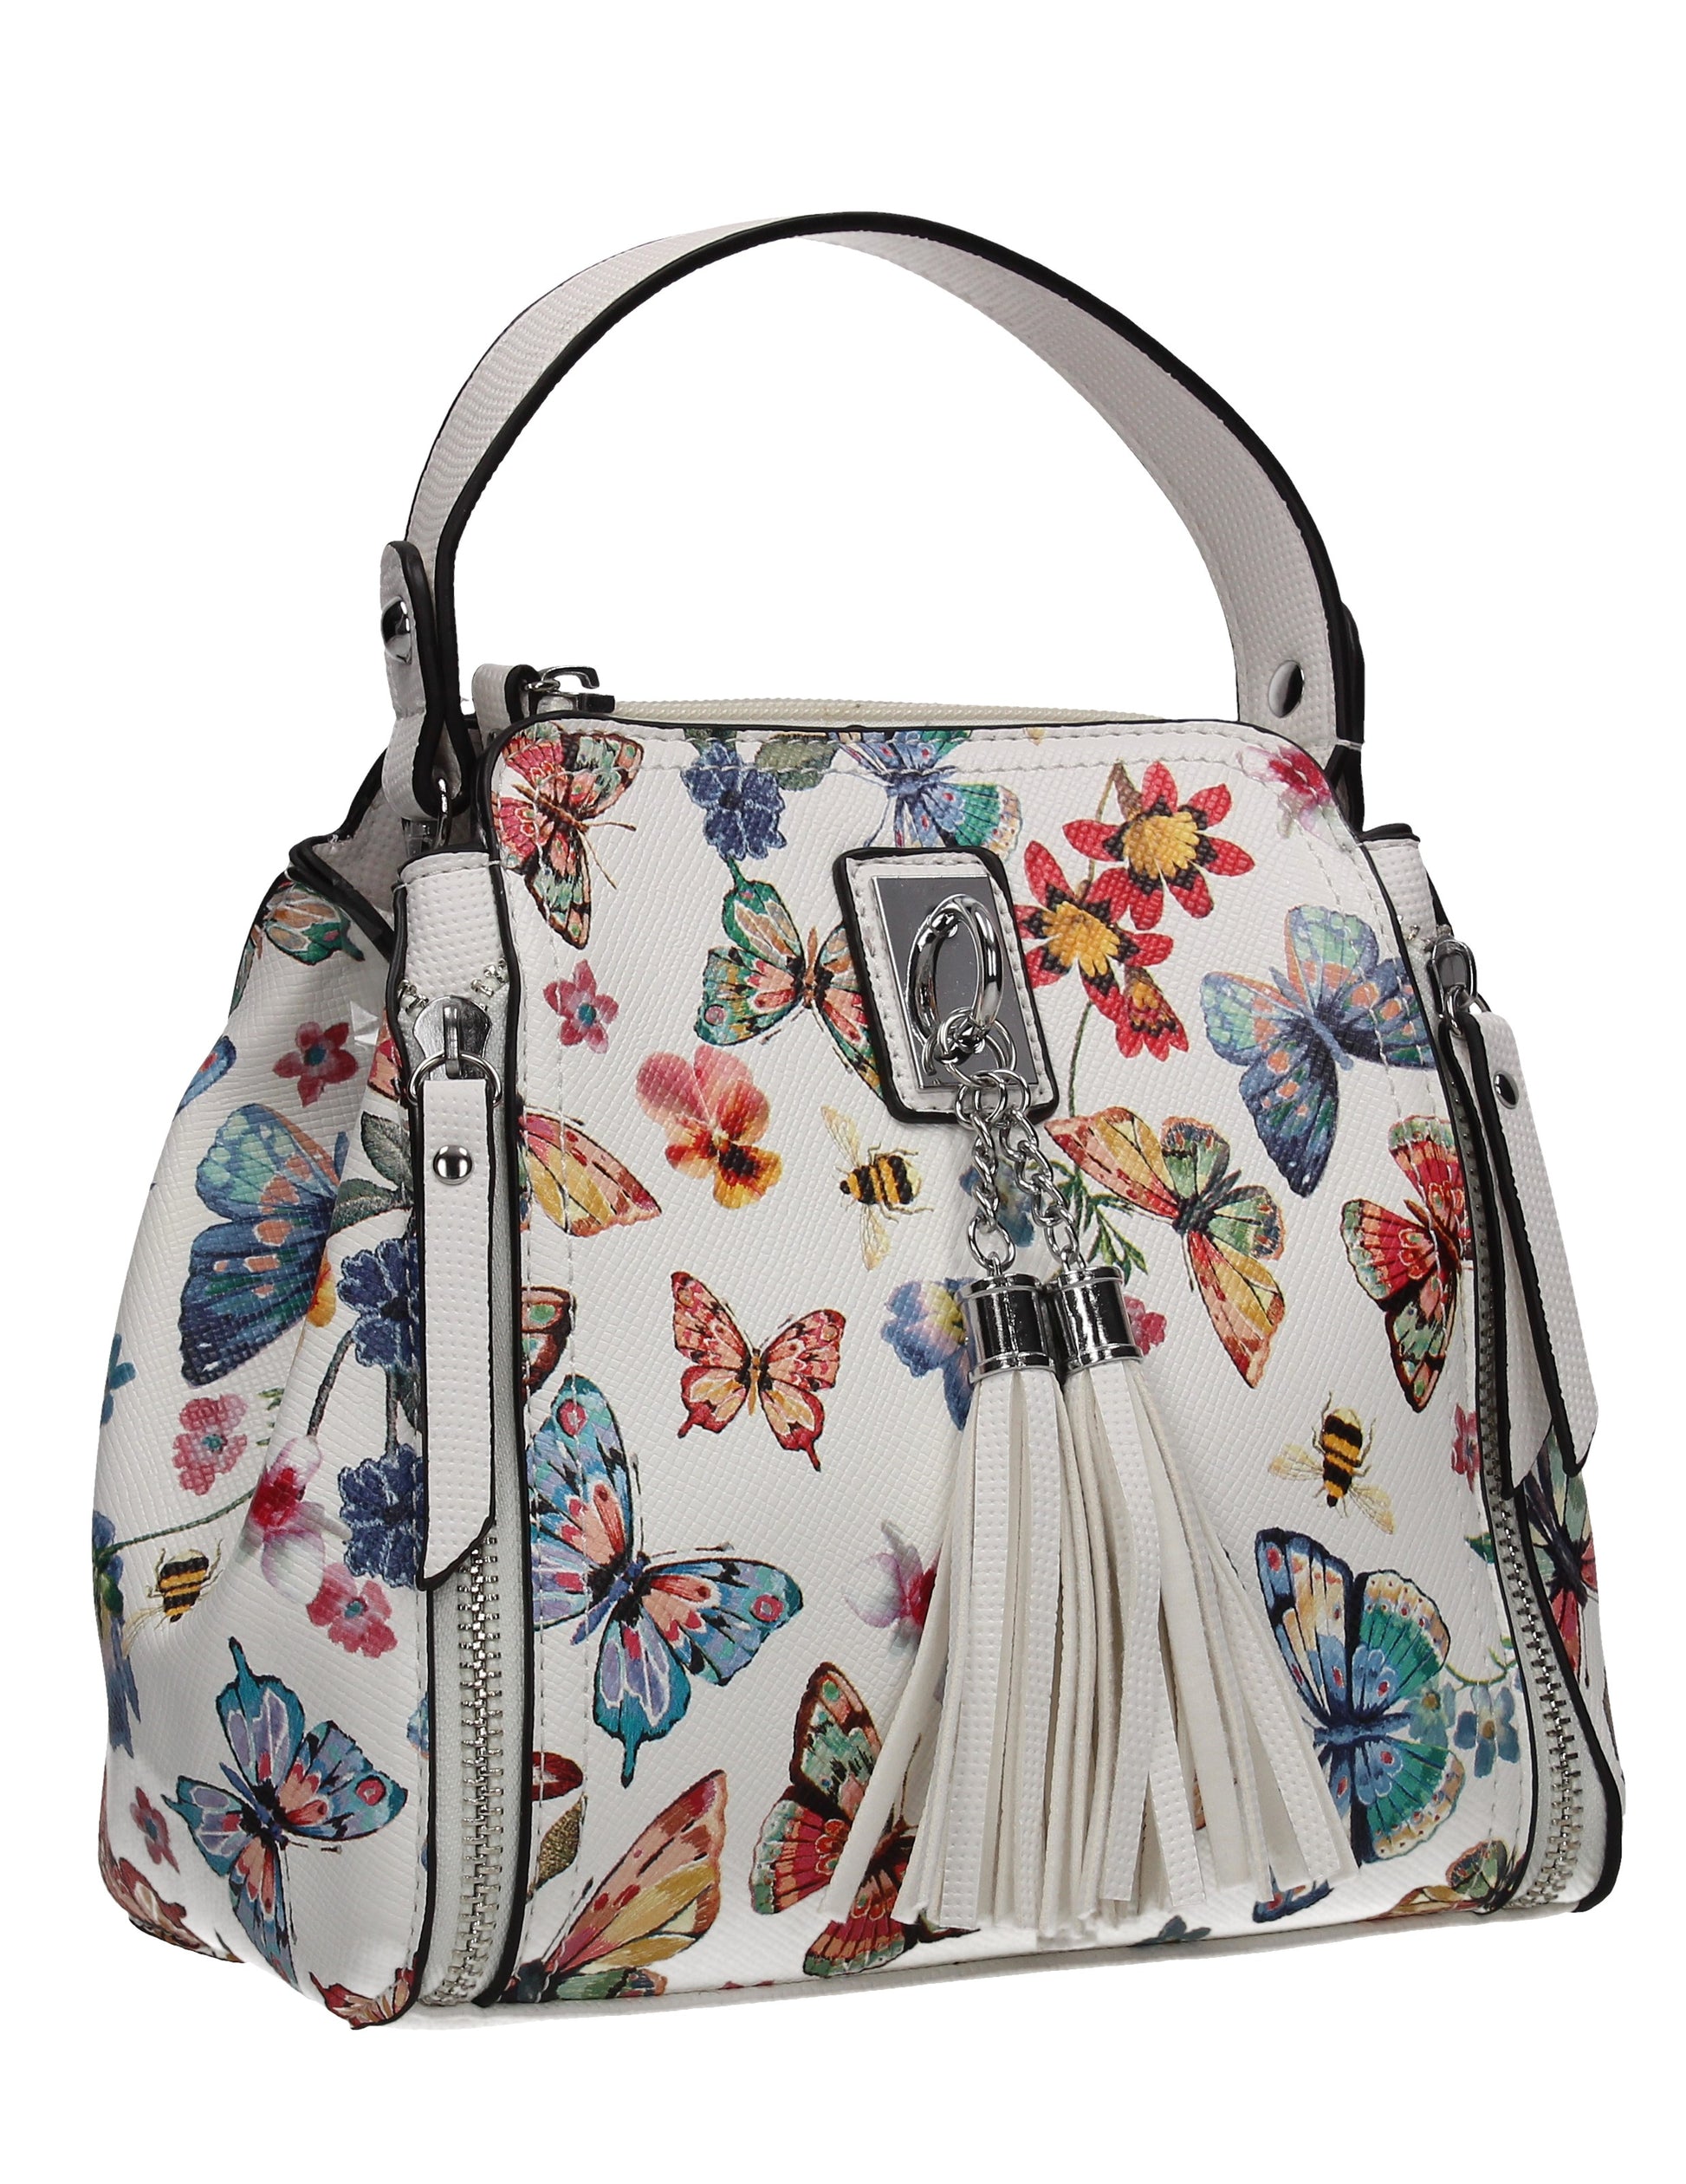 Anita Butterfly Handbag WhiteBeautiful Cute Animal Faux Leather Clutch Bag Handles Strap Summer School